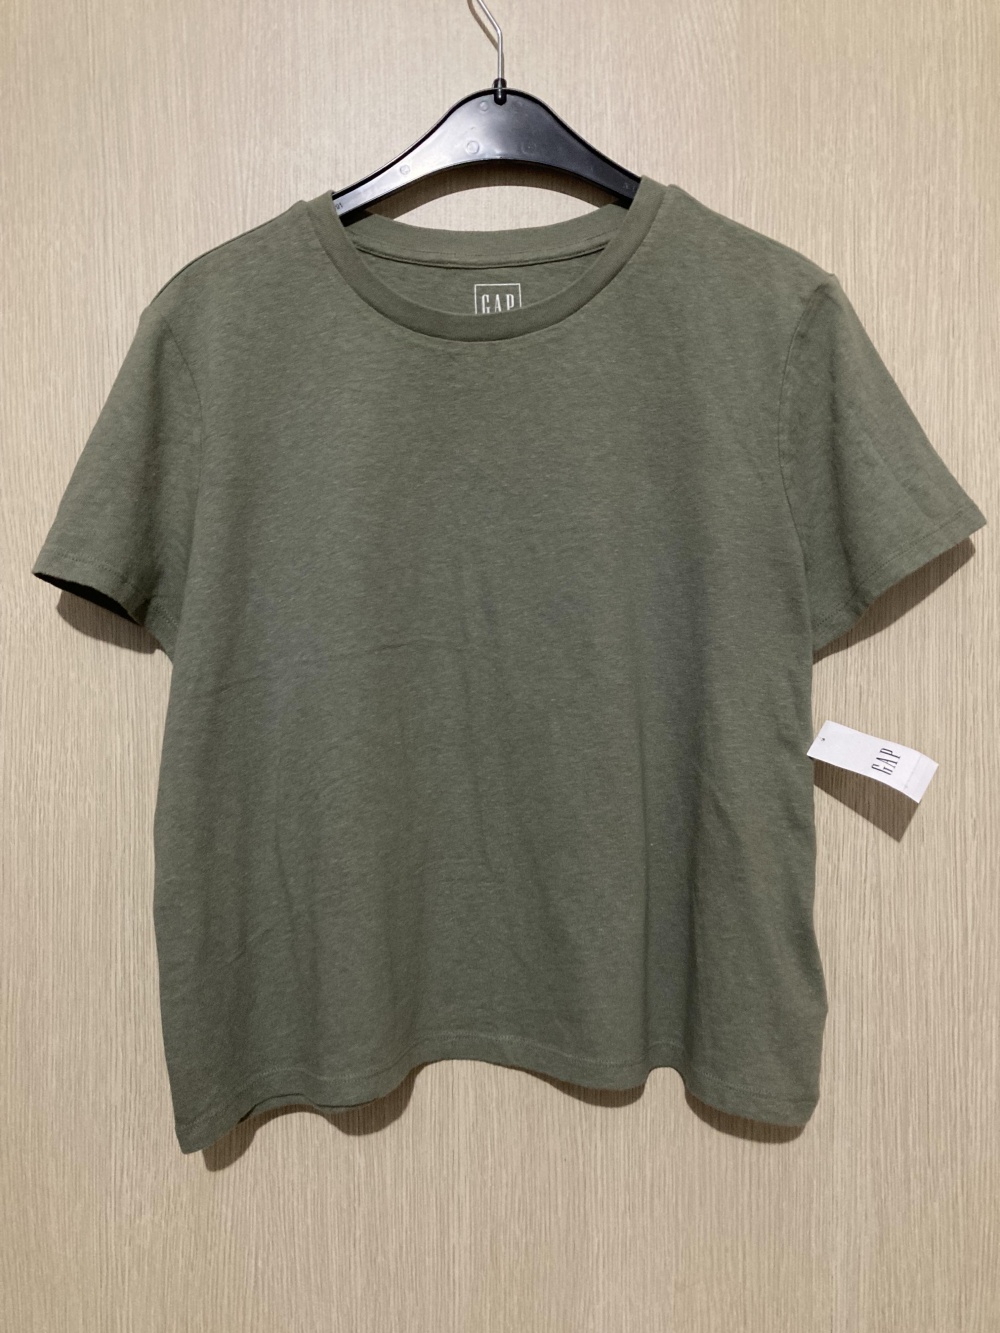 Юбка и футболка “ Gap ”, 48-50 размер